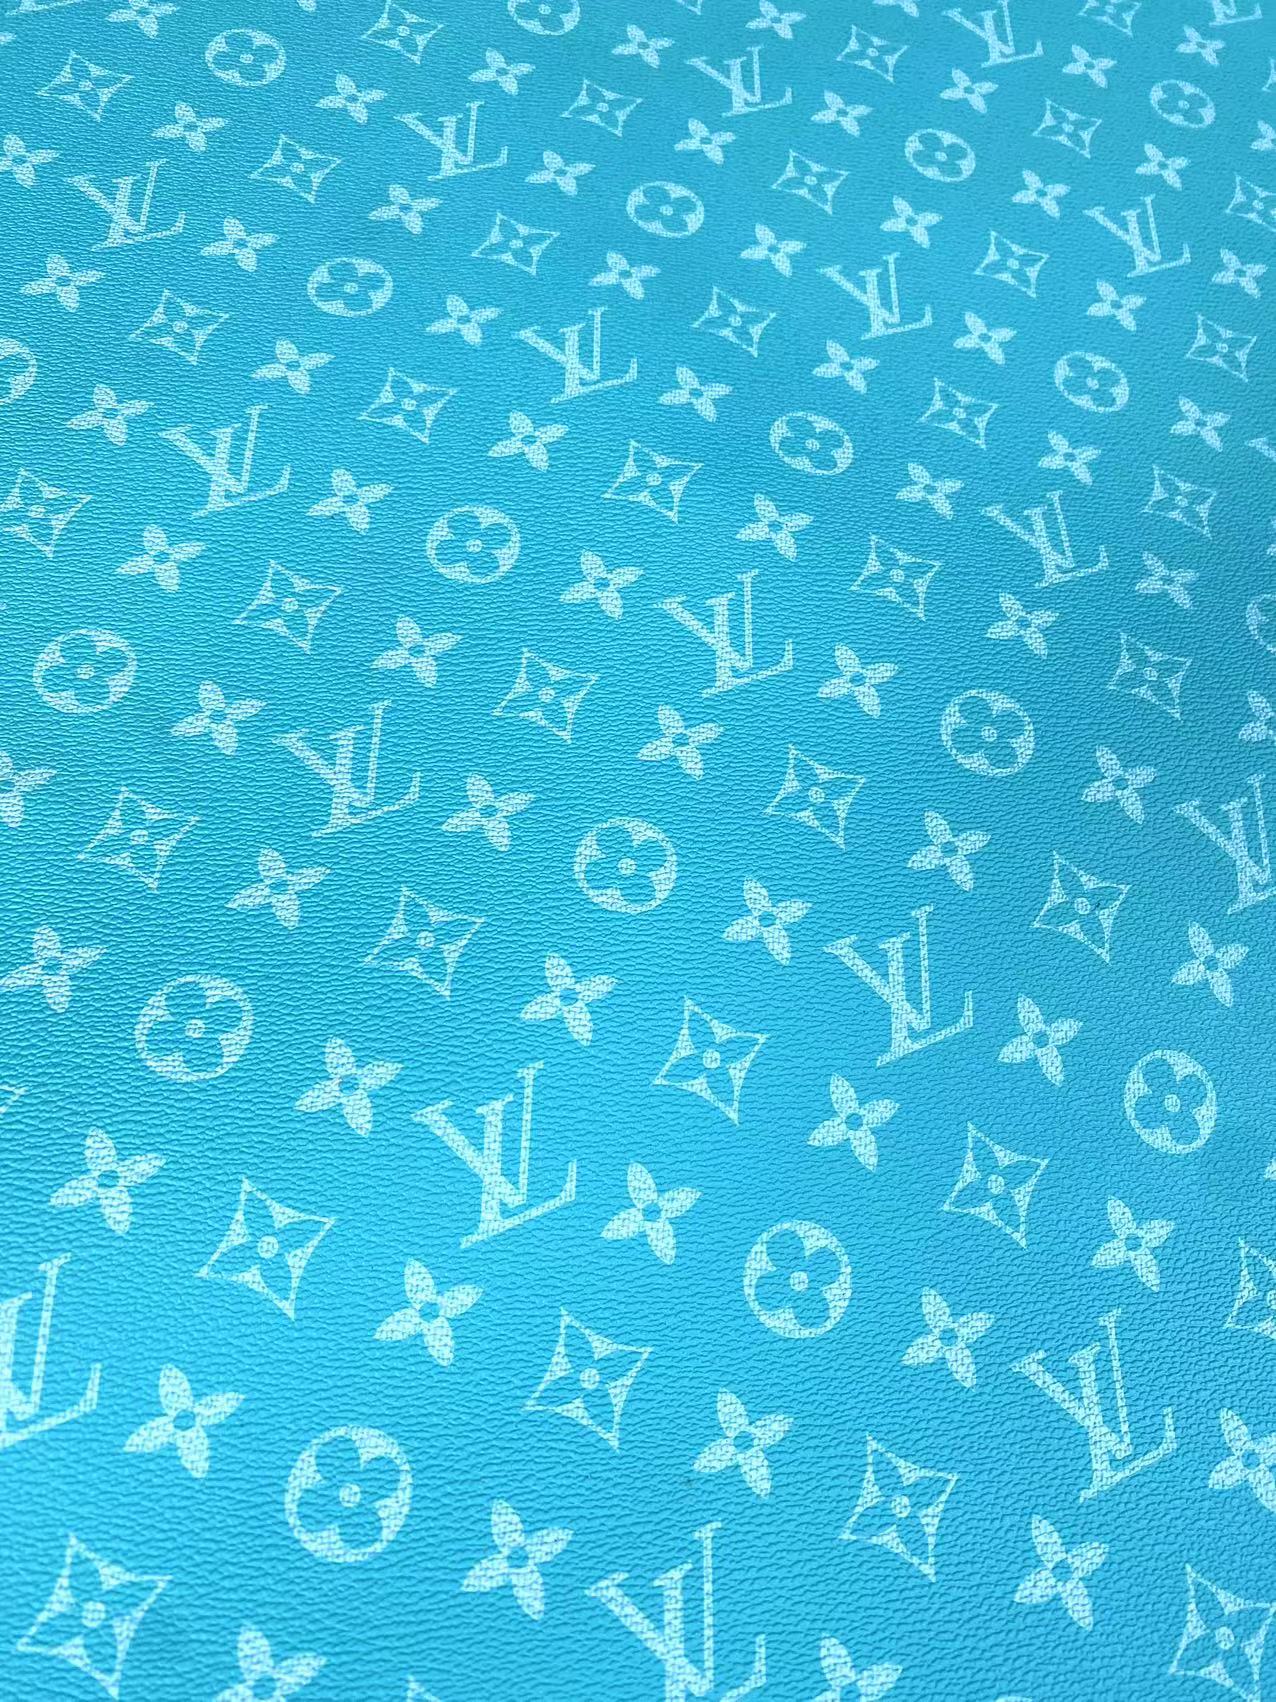 Clean Blue LV Vinyl Custom Fabric for Sneakers Handmade DIY Sewing Upholstery